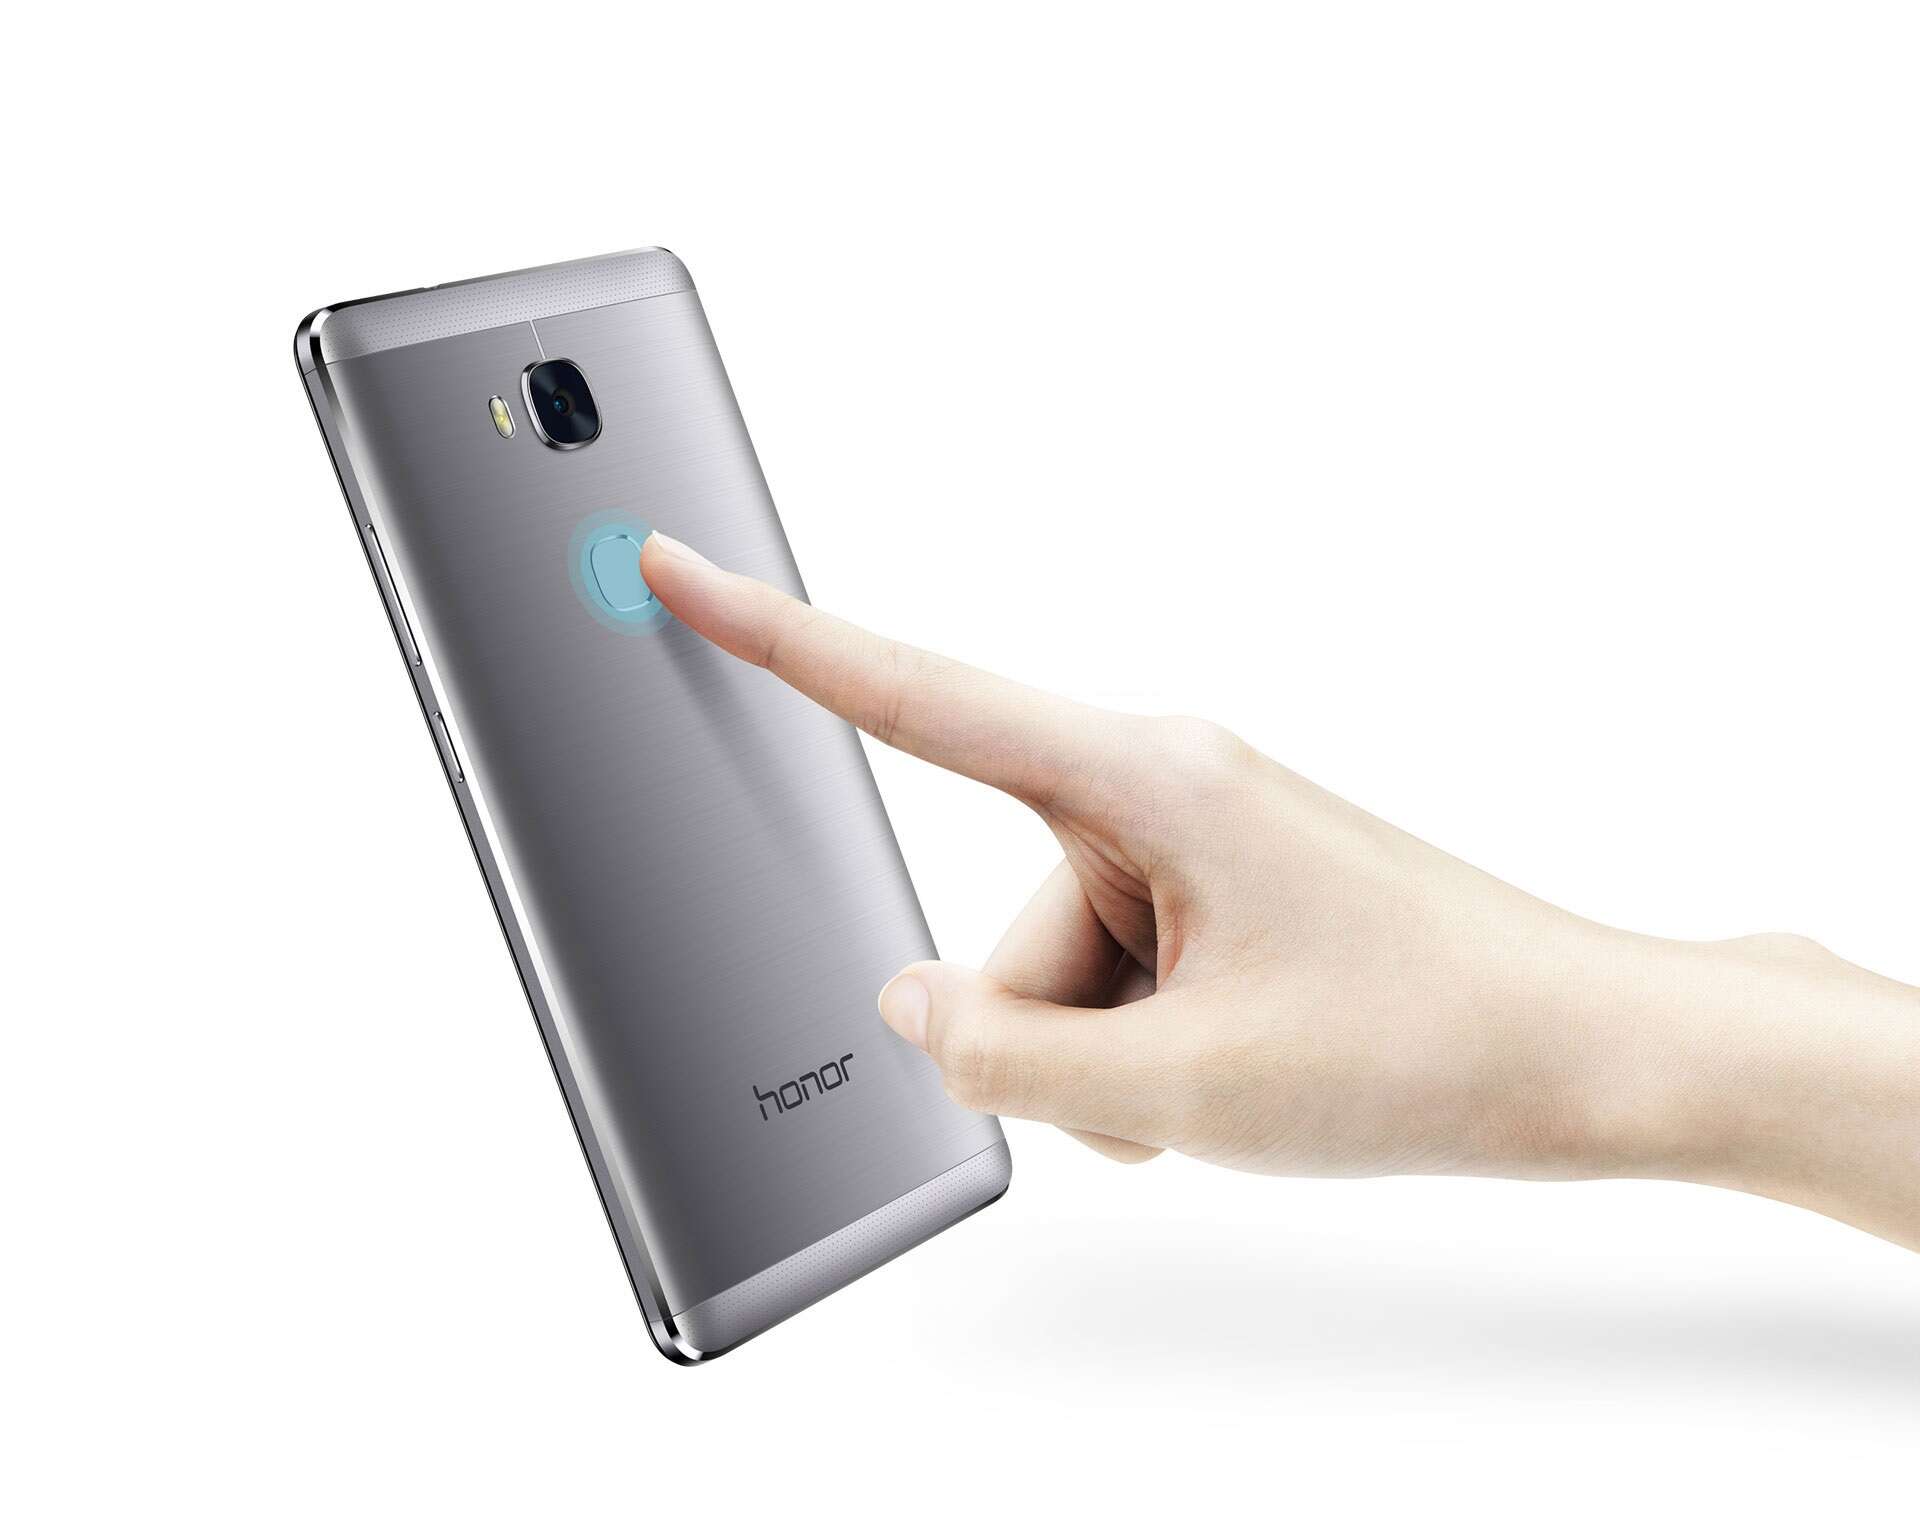 Huawei x5 купить. Huawei Honor 5x. Huawei x5. Хонор 5. Хонор 5с с отпечатком пальца.